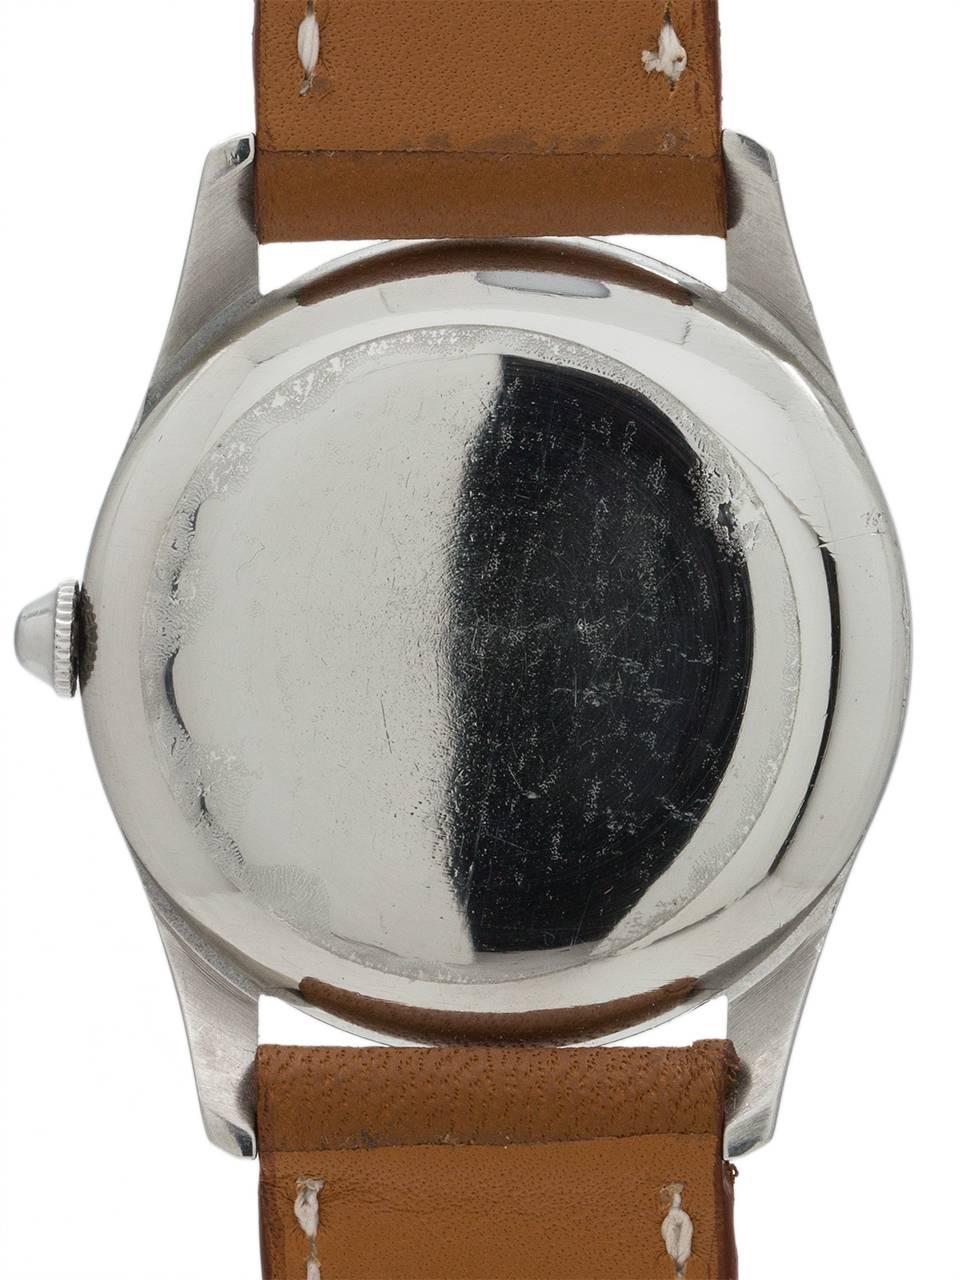 Men's Rolex Stainless Steel Dress Manual Wind Wristwatch Ref 5517, circa 1950s